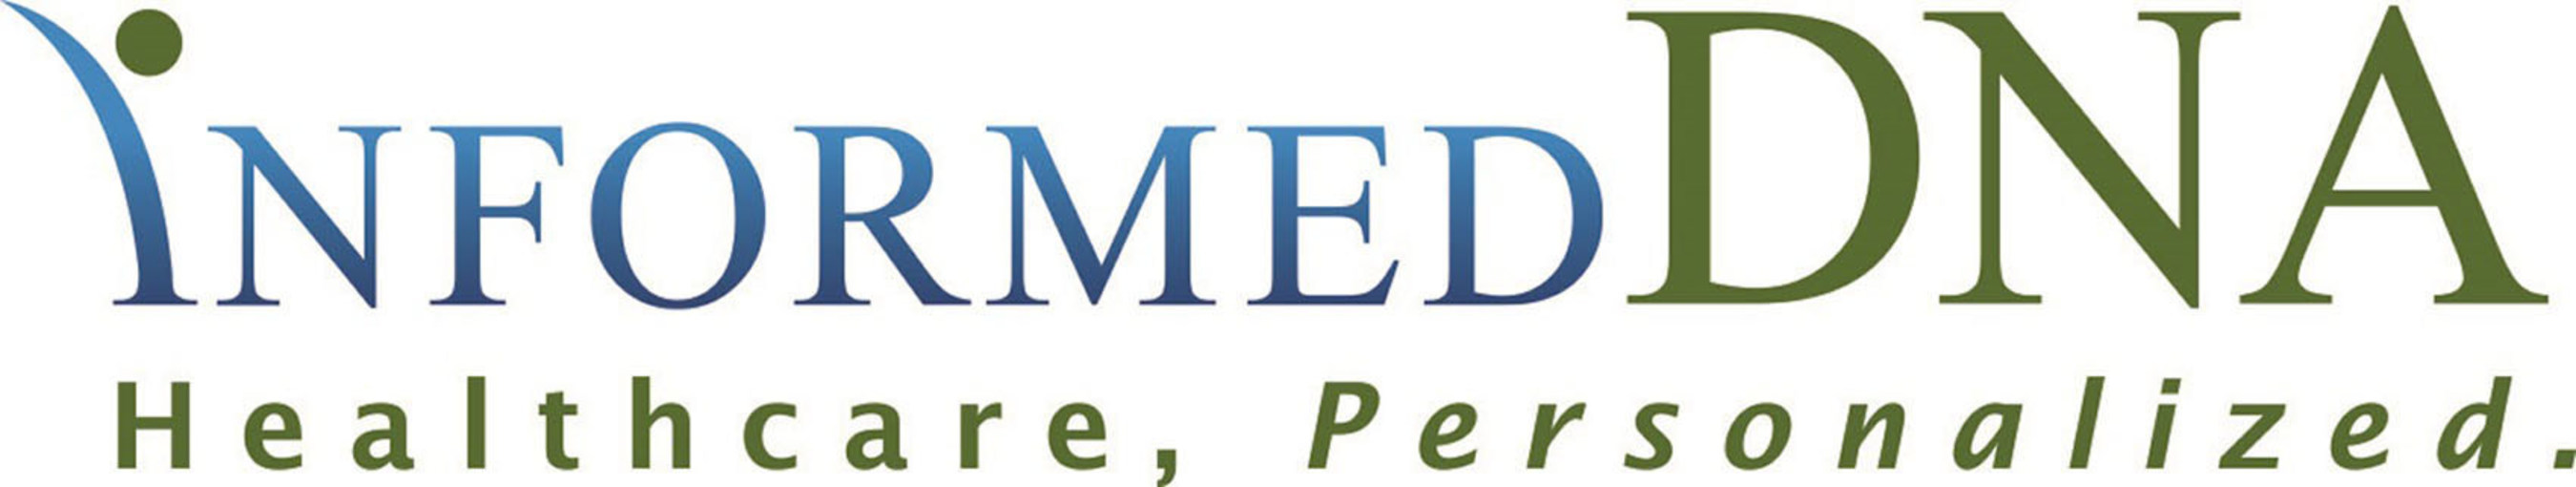 InformedDNA logo.